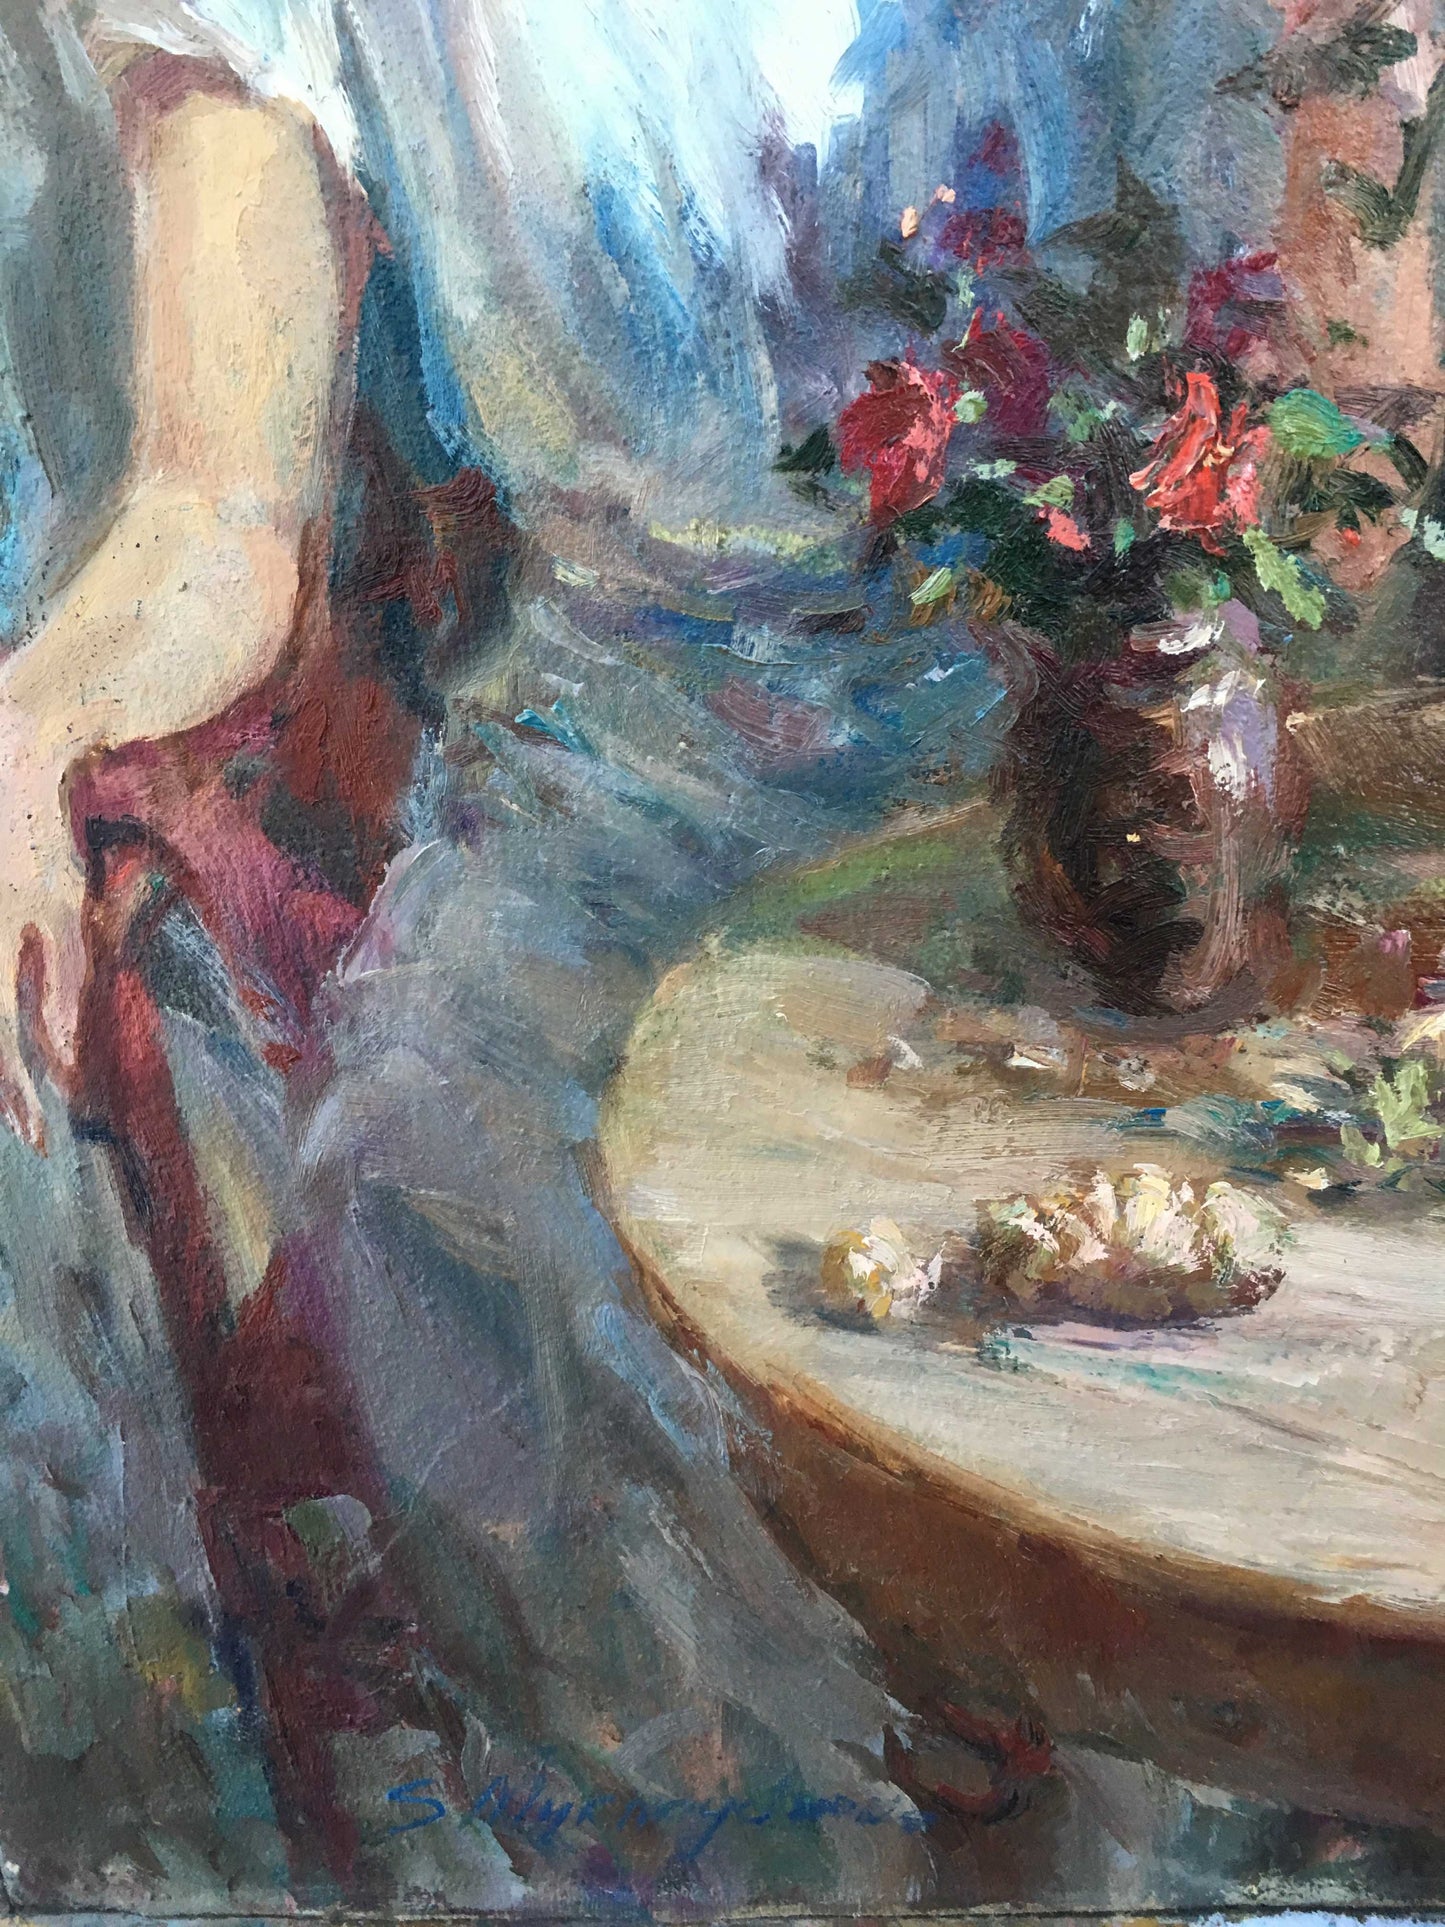 Pensive girl oil painting